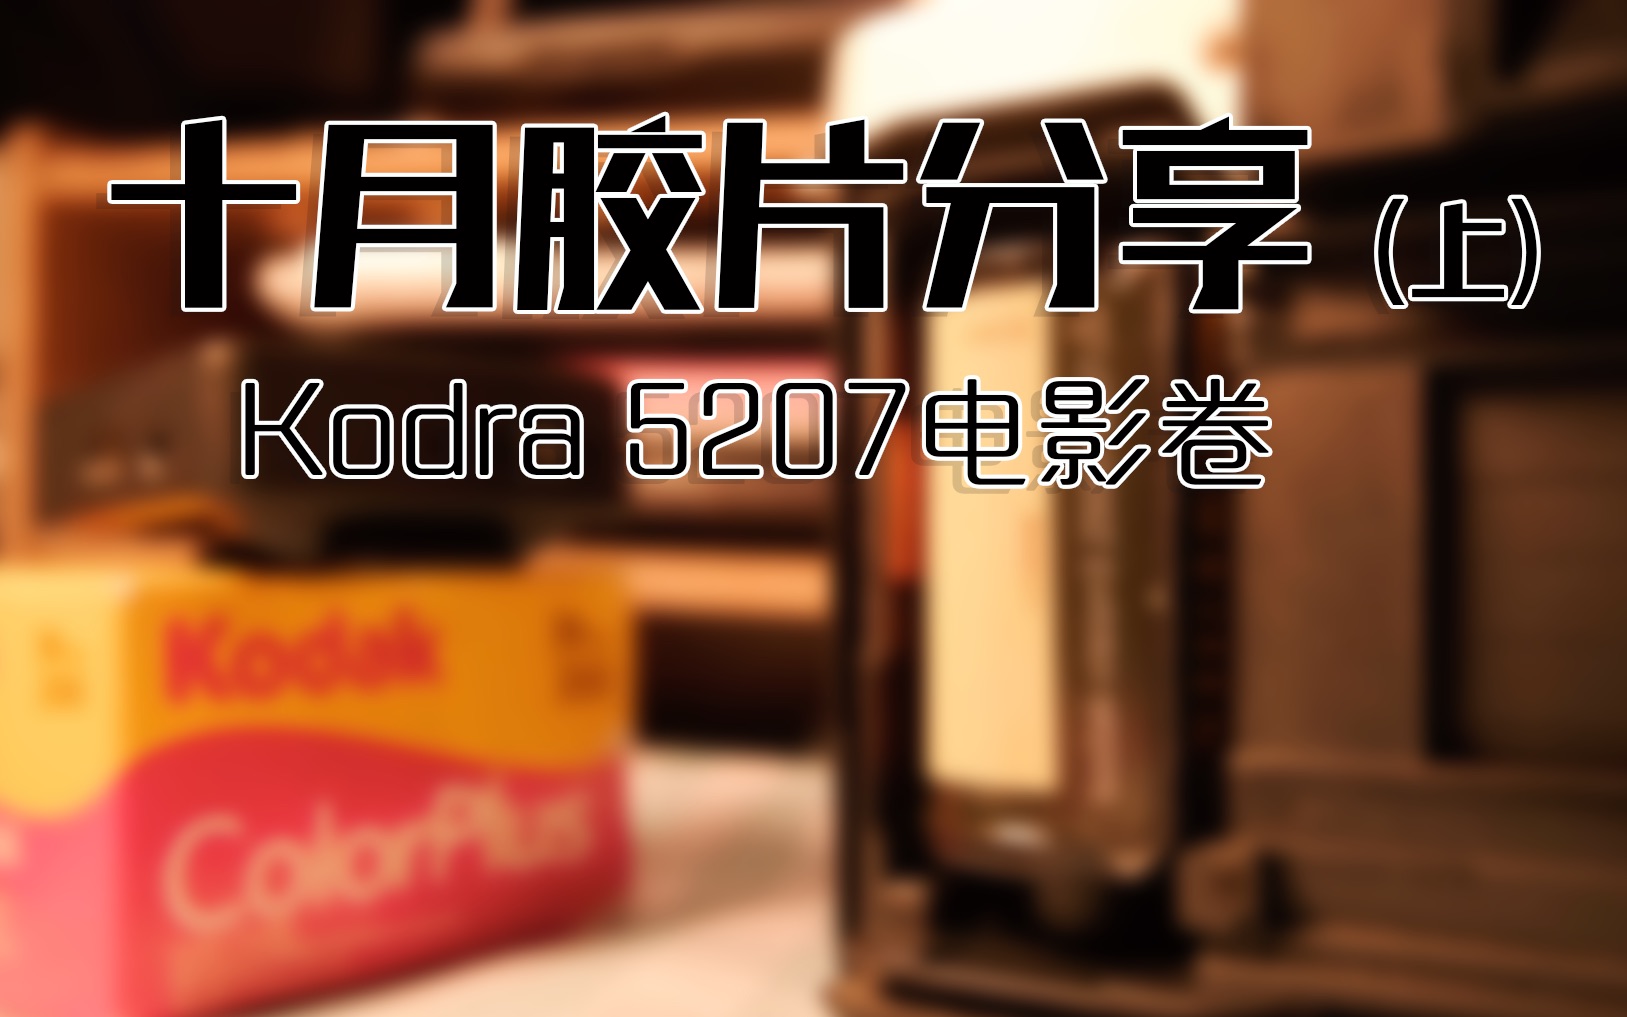 Kodak Supra Enduraカラー印画紙 8x10-